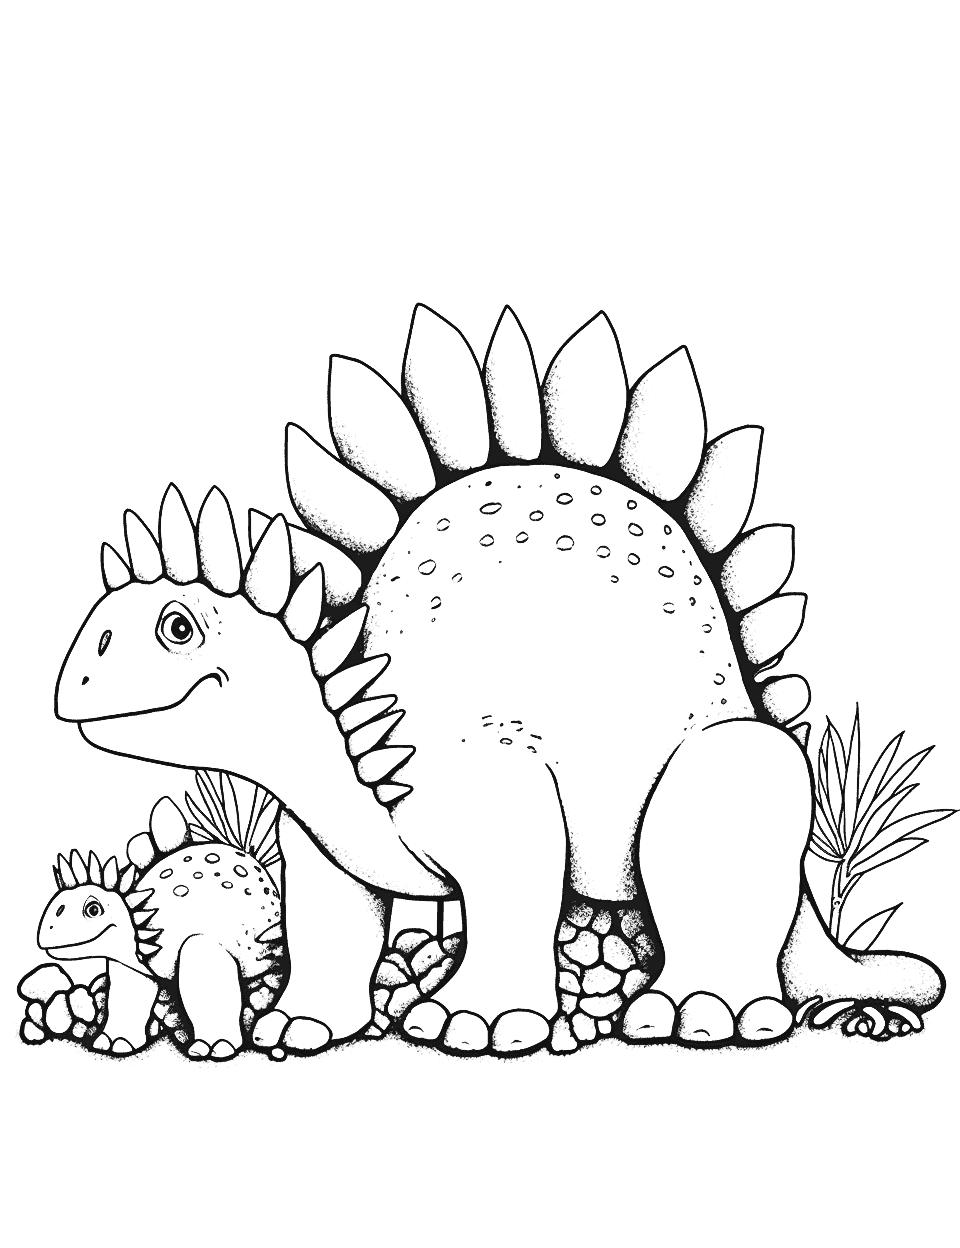 Stegosaurus Family Dinosaur Coloring Page - A family of Stegosaurus grazing peacefully.